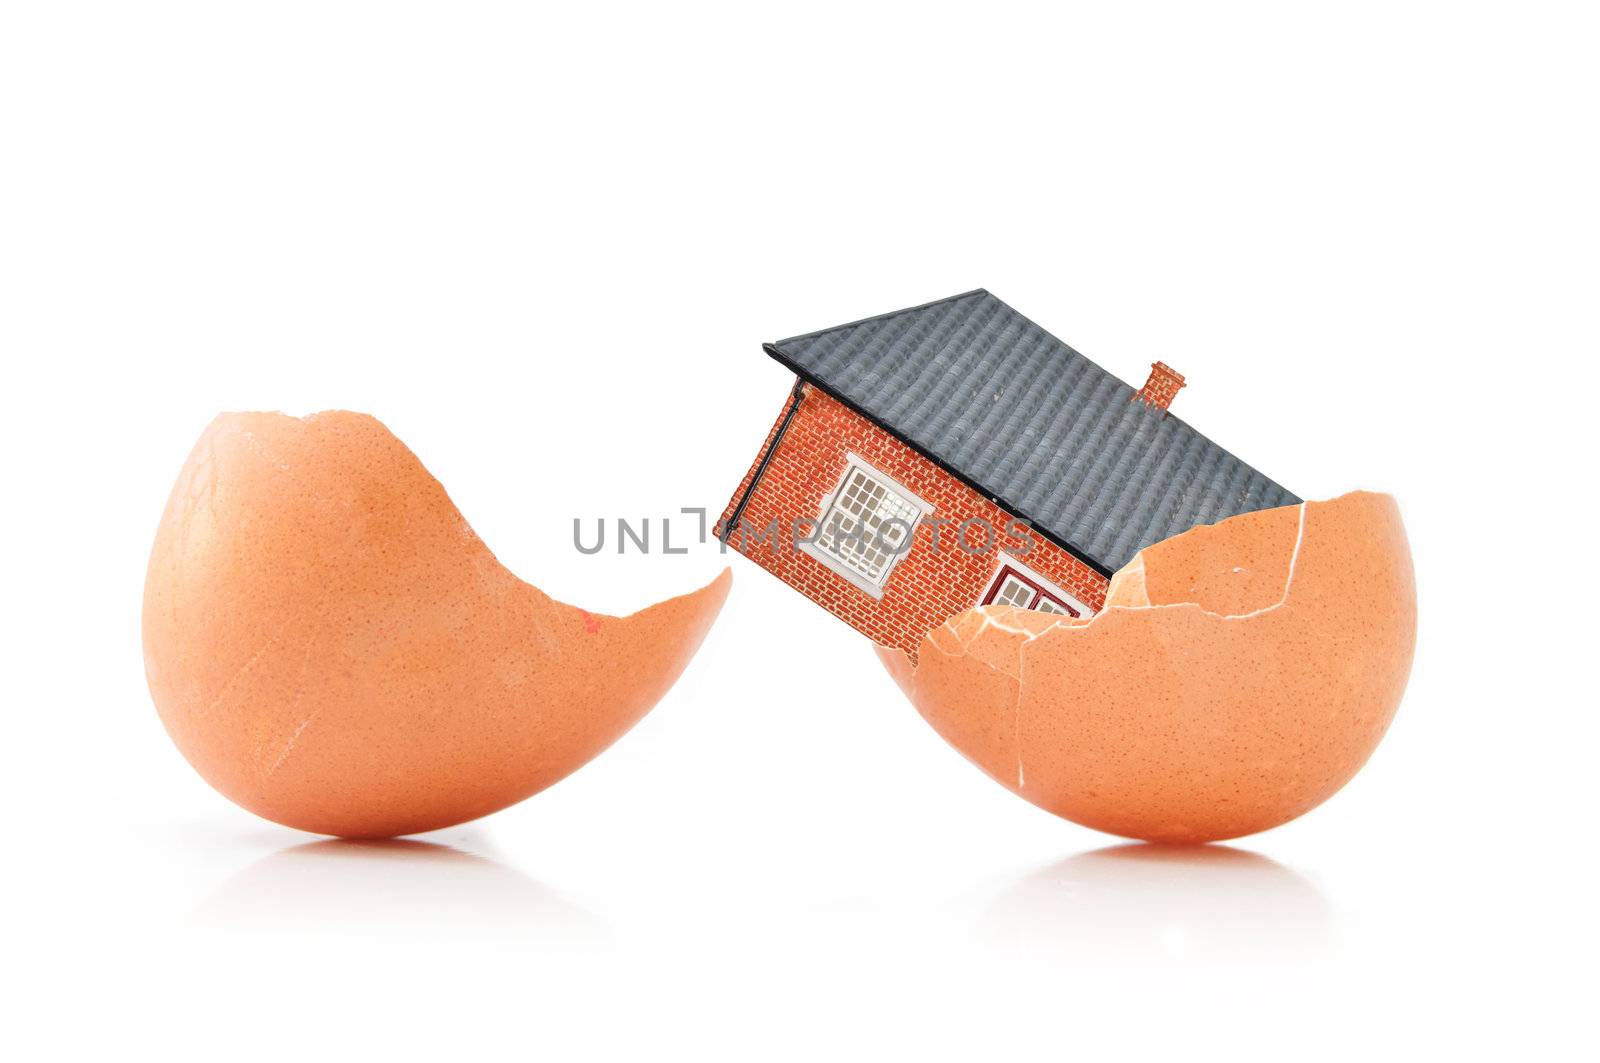 House inside an egg by unikpix